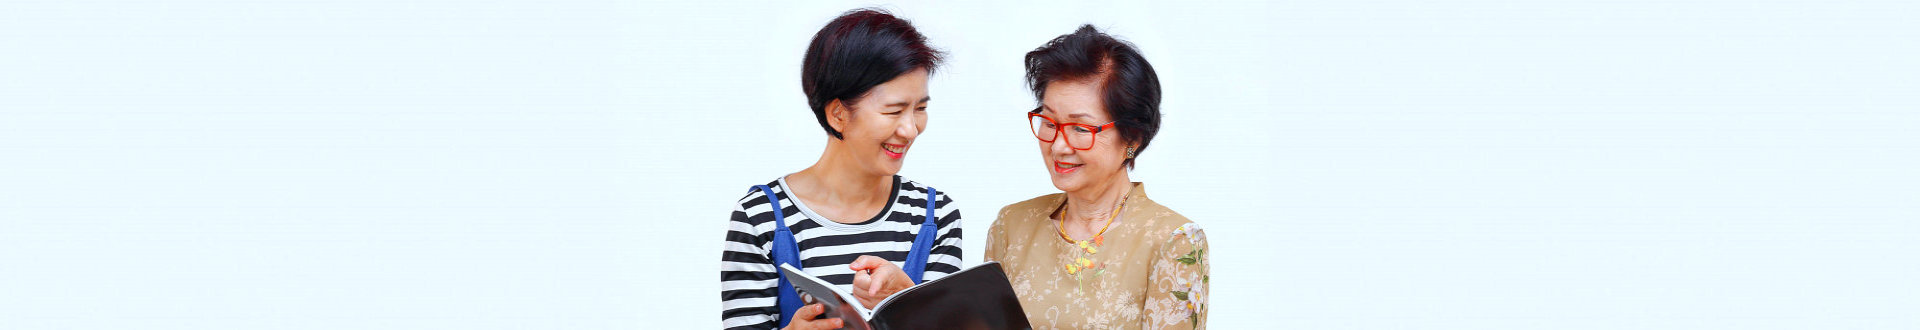 caregiver and a senior woman reading a book